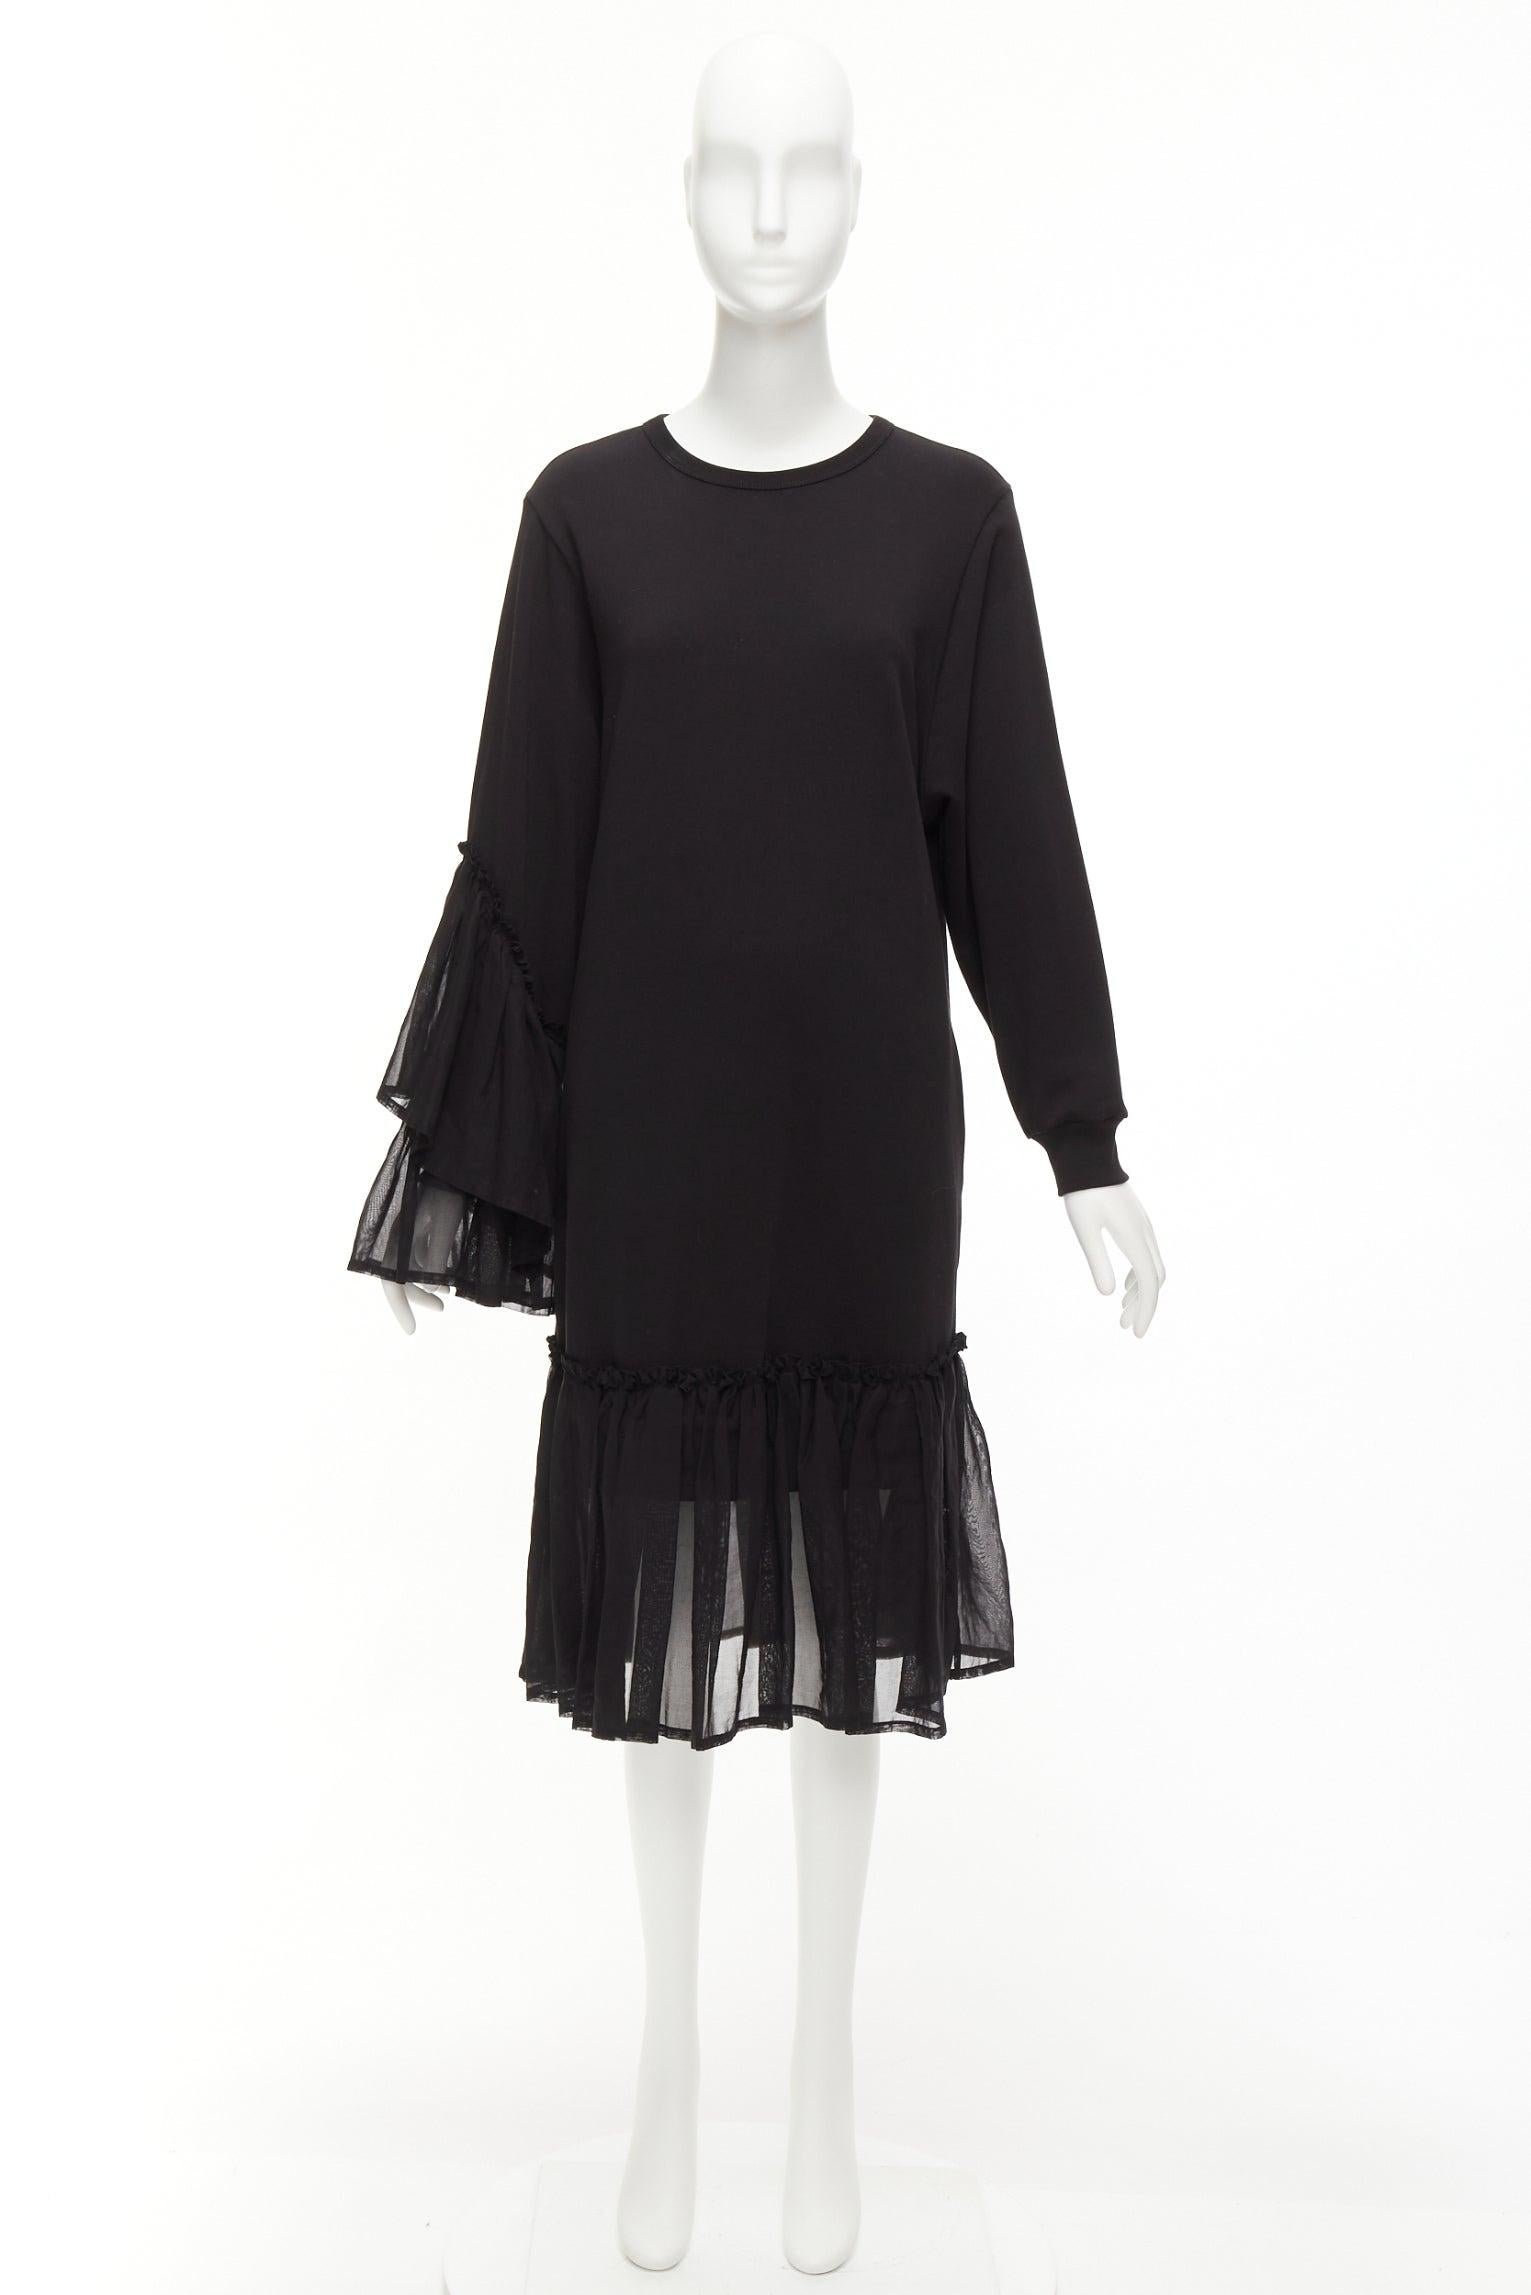 DRIES VAN NOTEN black cotton asymmetric sleeve ruffle hem sweatshirt dress S For Sale 5